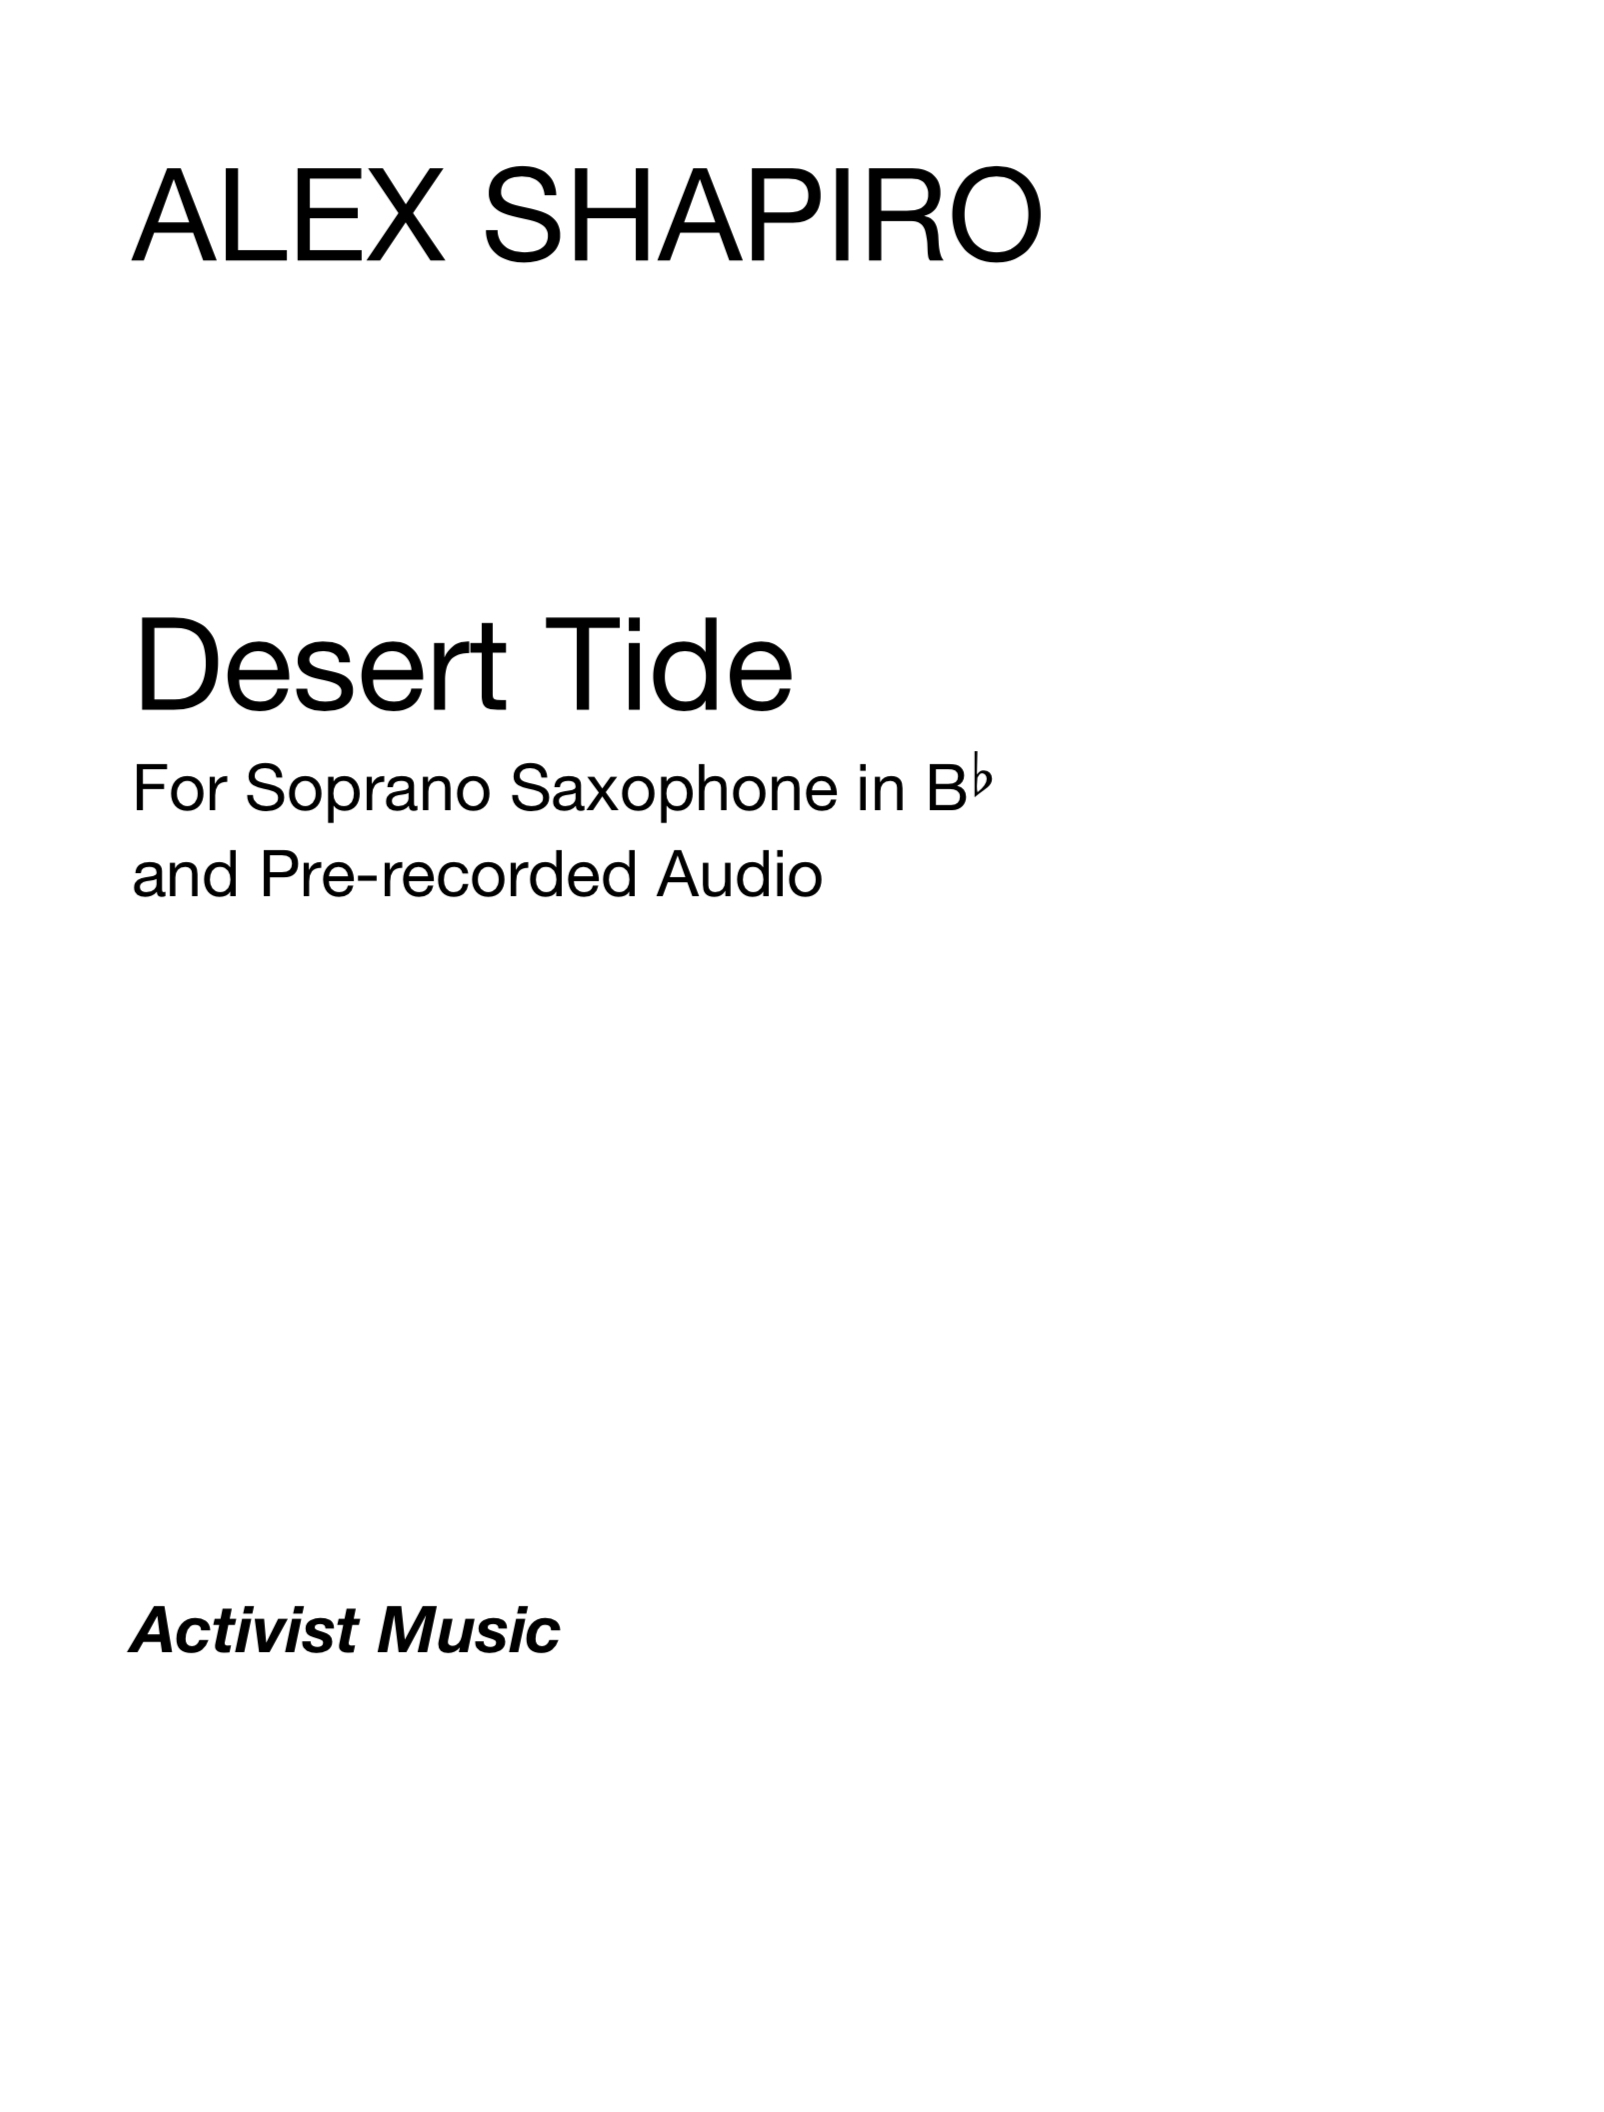 Desert Tide by Alex Shapiro